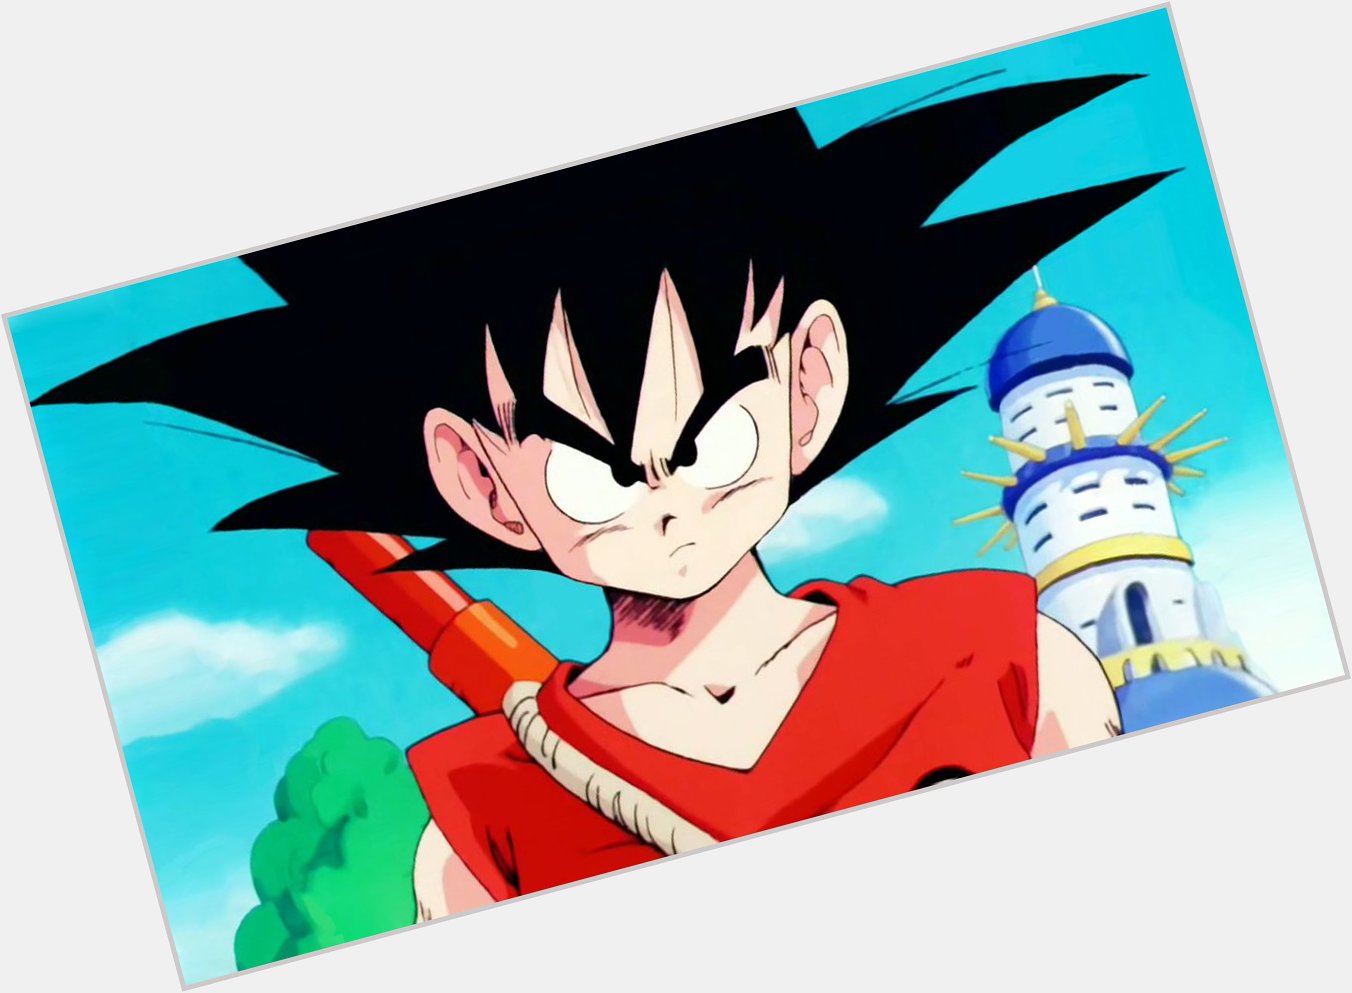 Happy Birthday Akira Toriyama and thank you for creating a amazing main character like Goku 